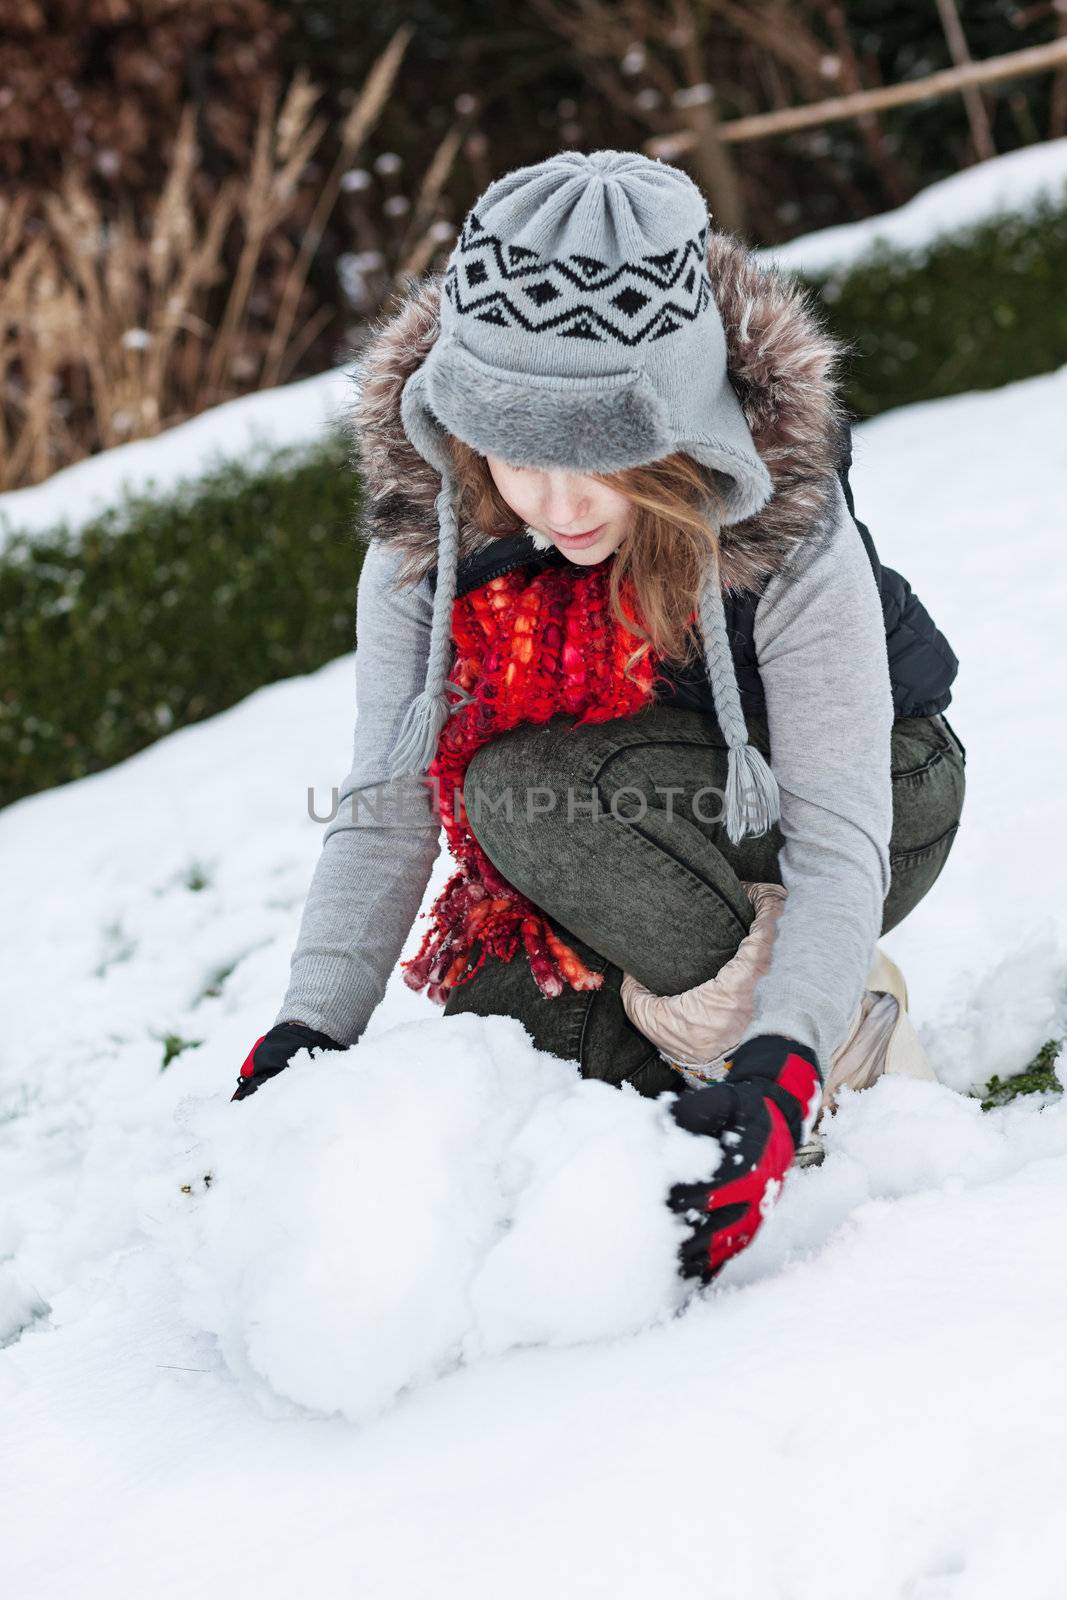 Teenager girl making snowman in snowy back yard 